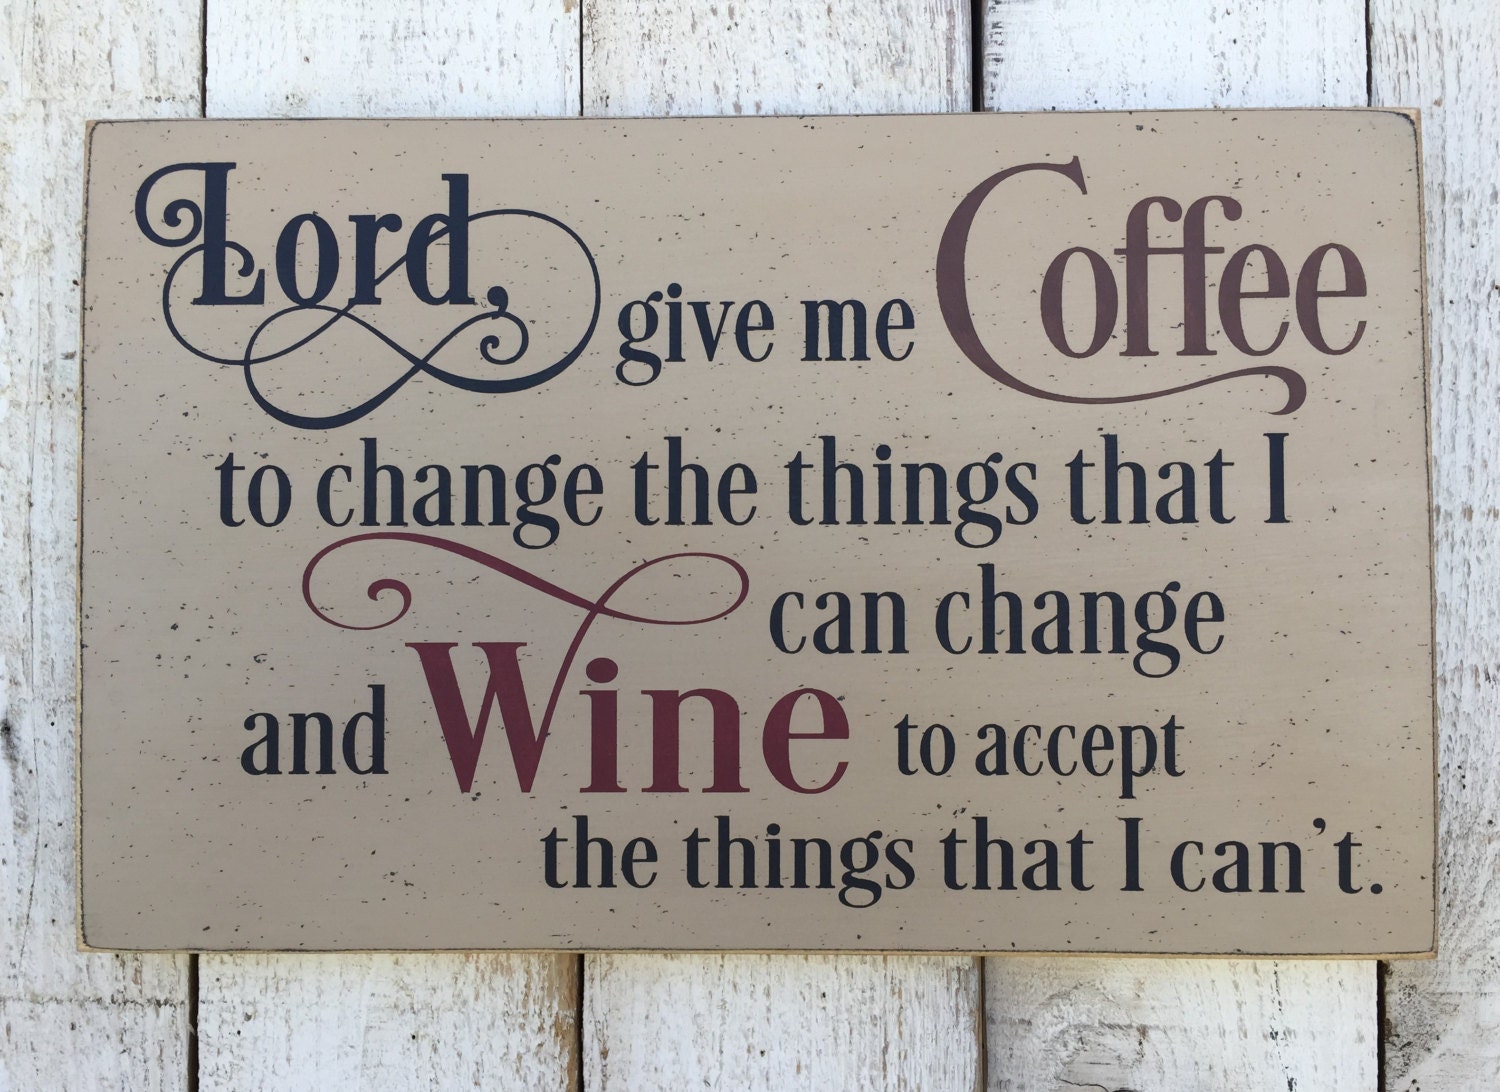 Lord Give Me Coffee, Wine, and Chocolate - Tea Towel - Lone Star Art